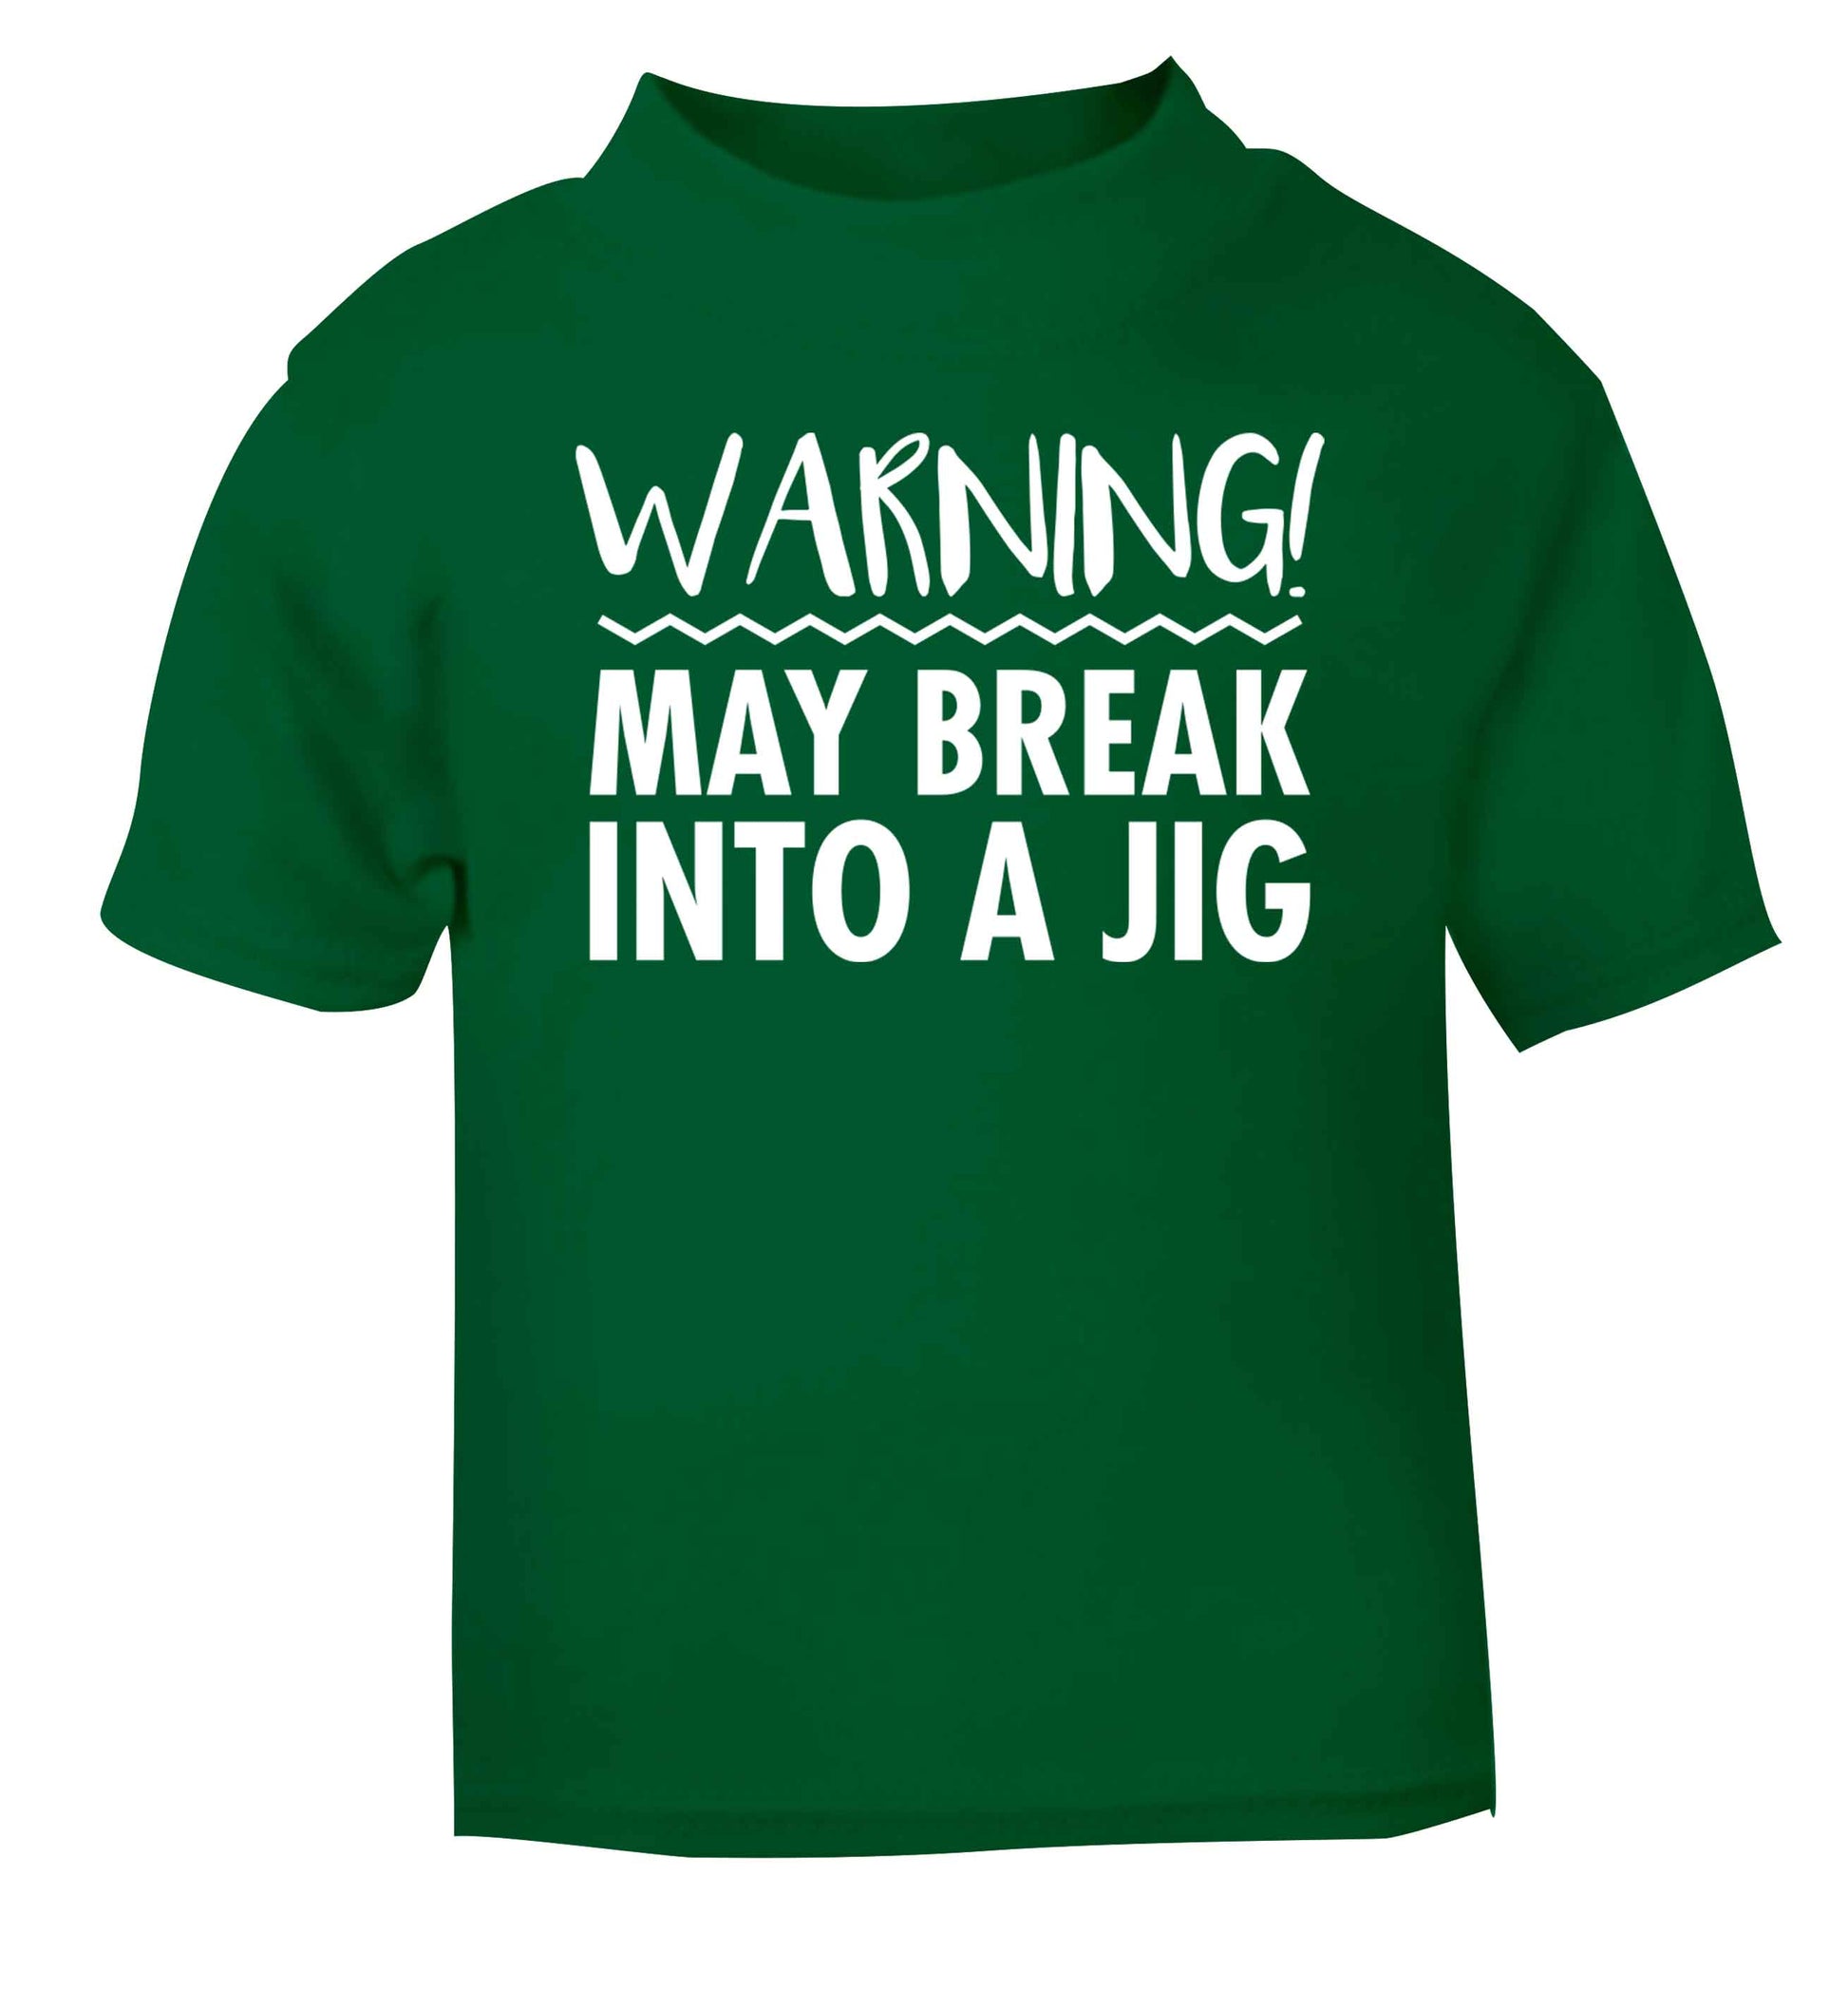 Warning may break into a jig green baby toddler Tshirt 2 Years